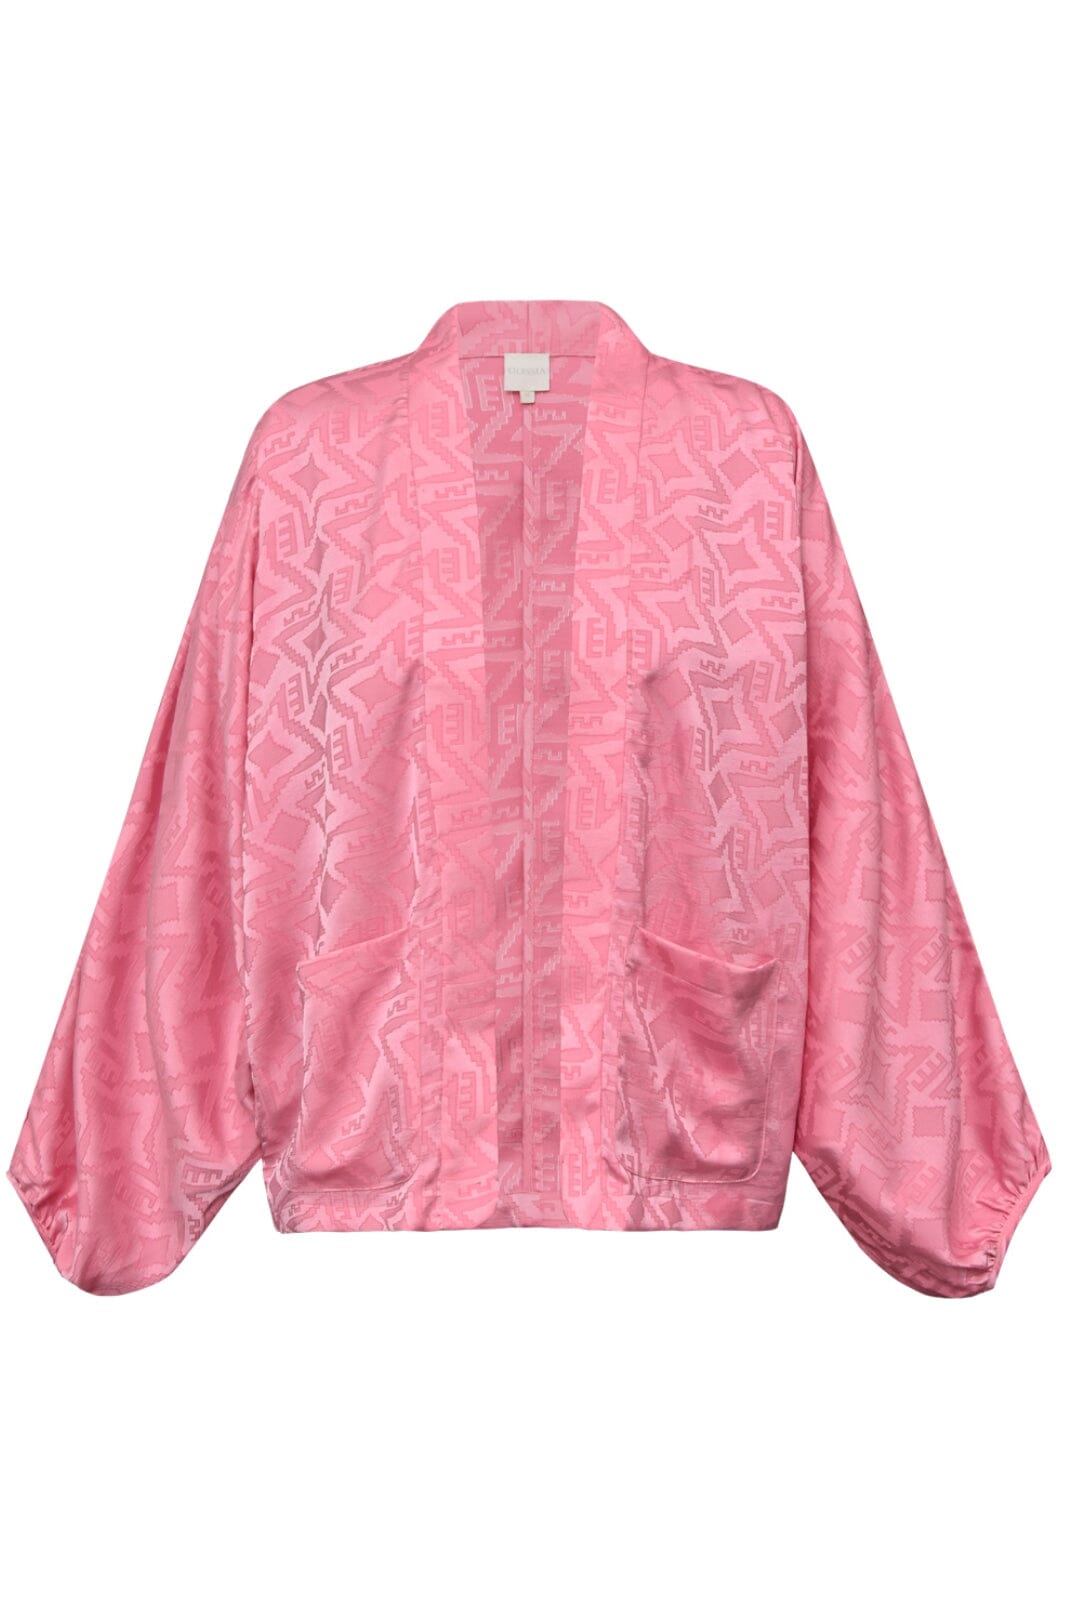 Gossia - Anastaciago Jacket - Light Pink Cardigans 